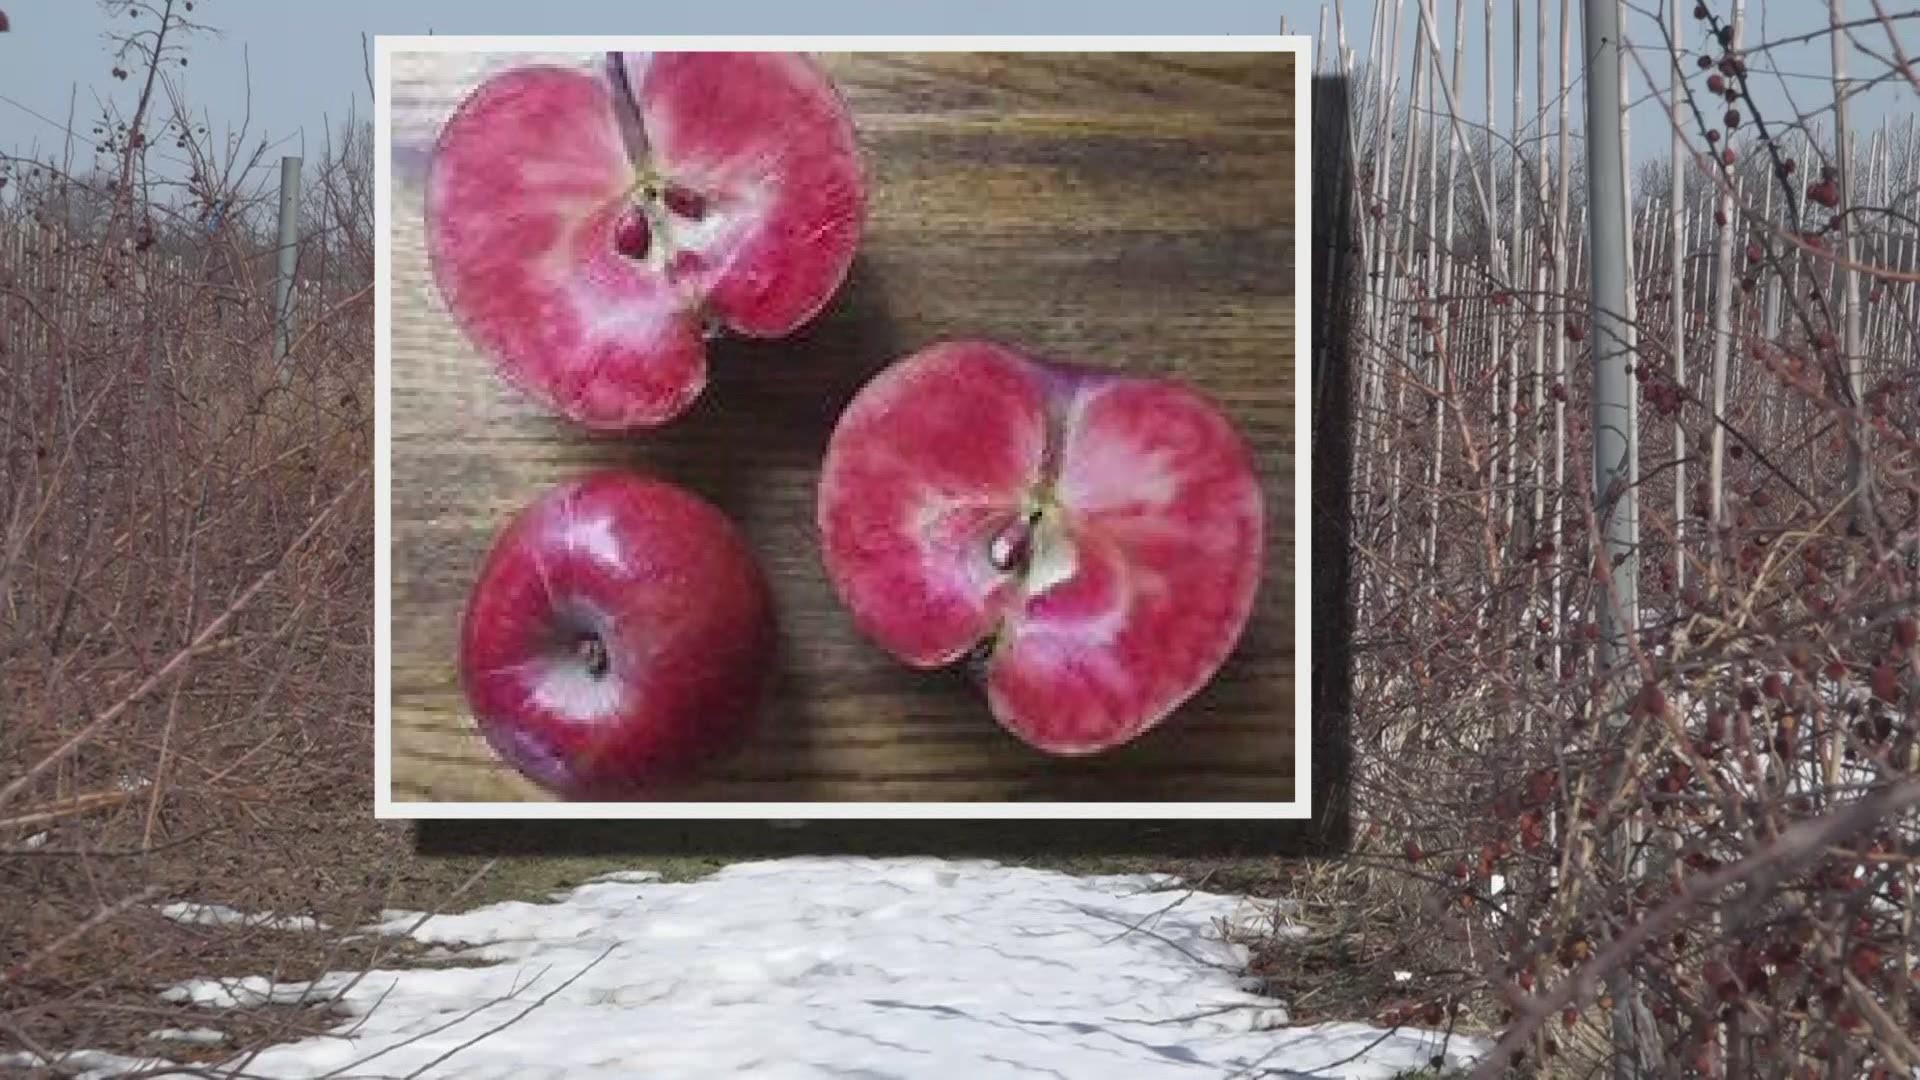 MSU professor Steven Van Nocker has been breeding apple trees for 20 years. He's now creating a valuable taste for apple growers.